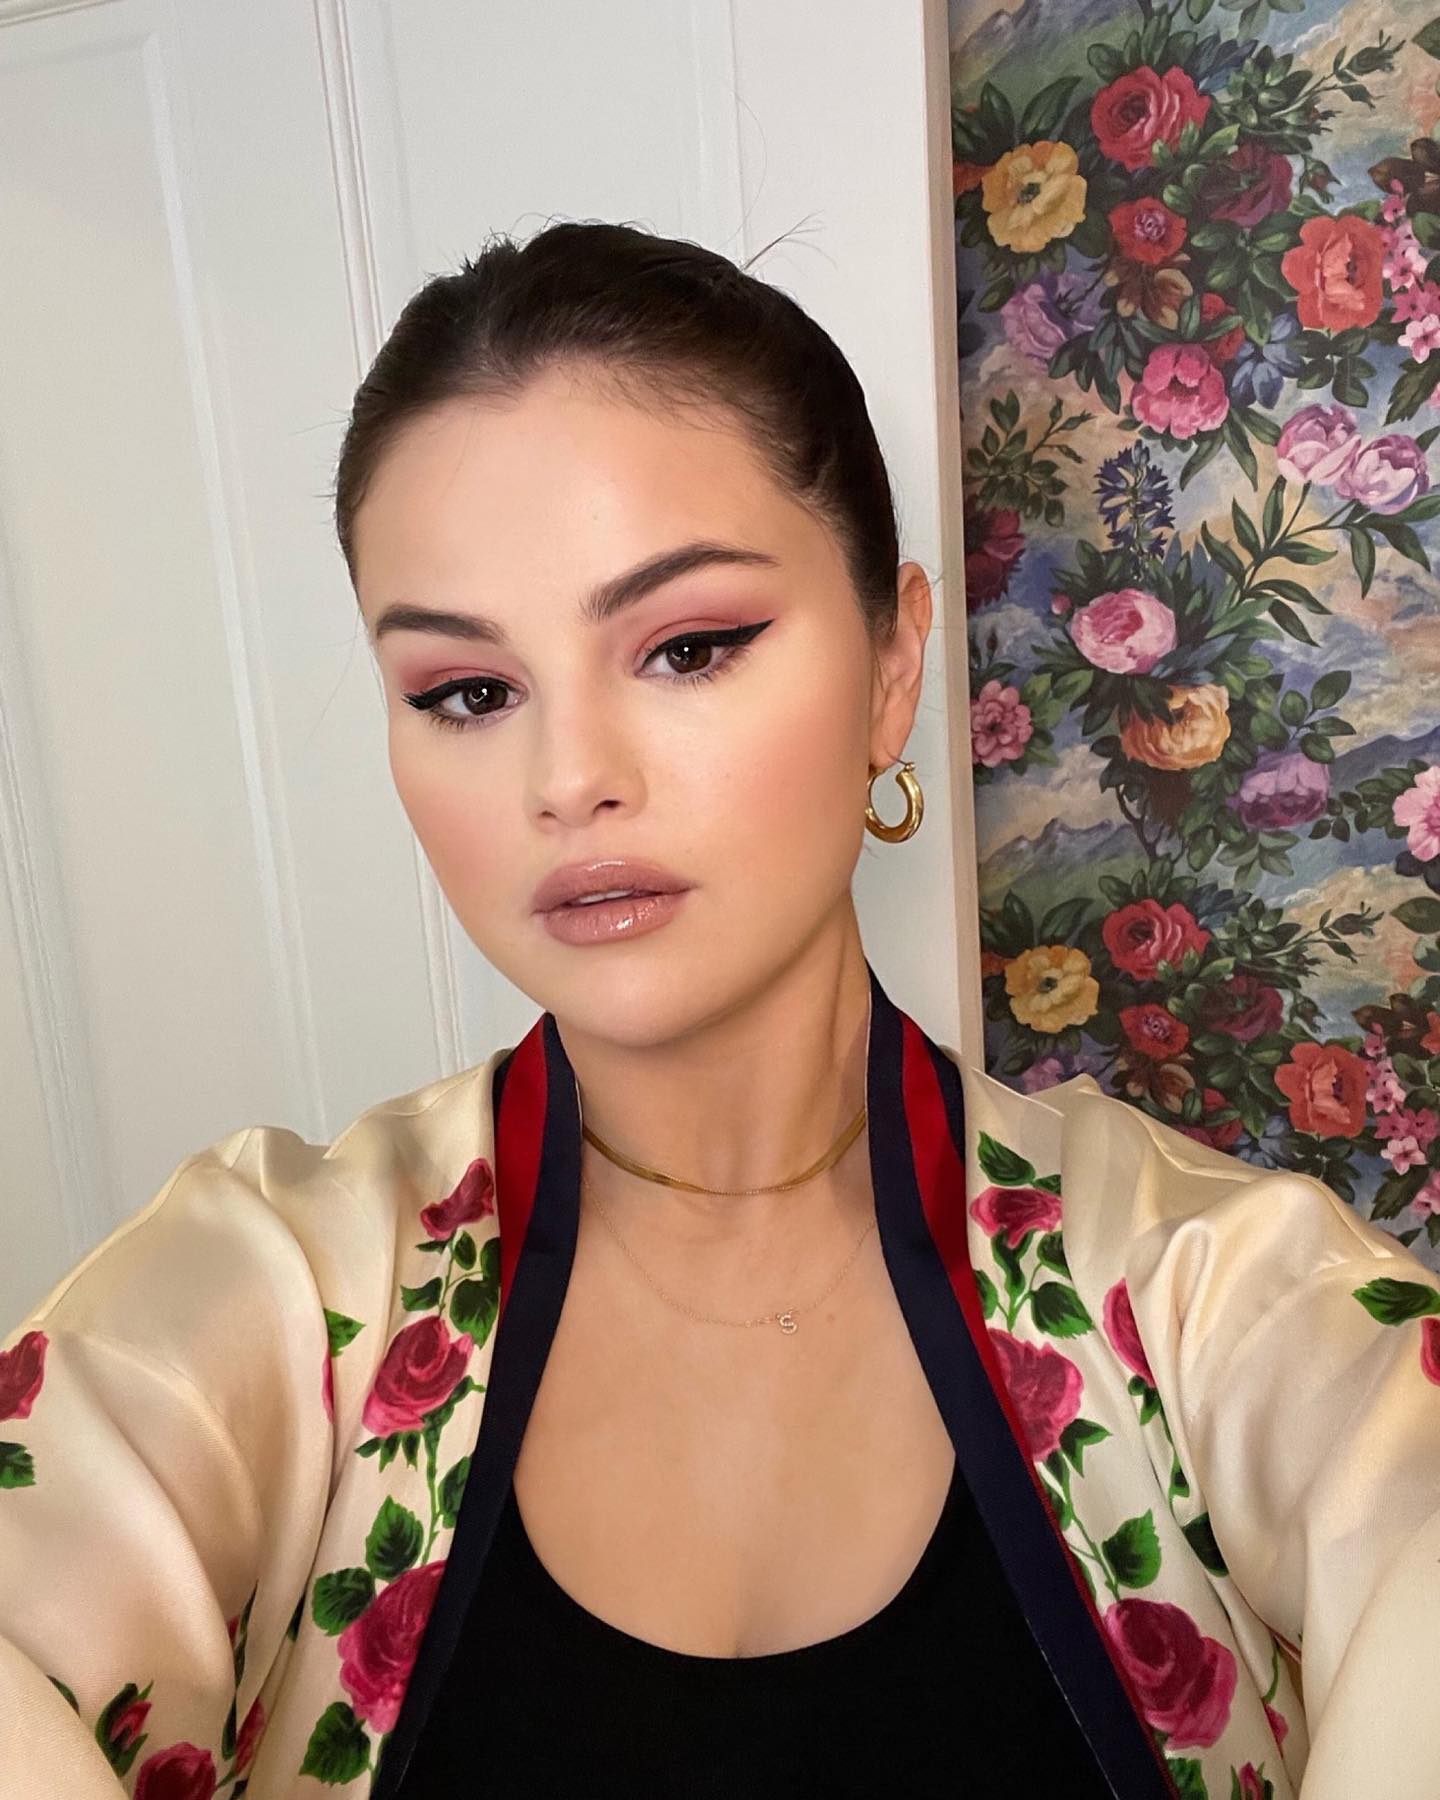 Selena Gomez Shares a Late Night Makeup Tutorial!